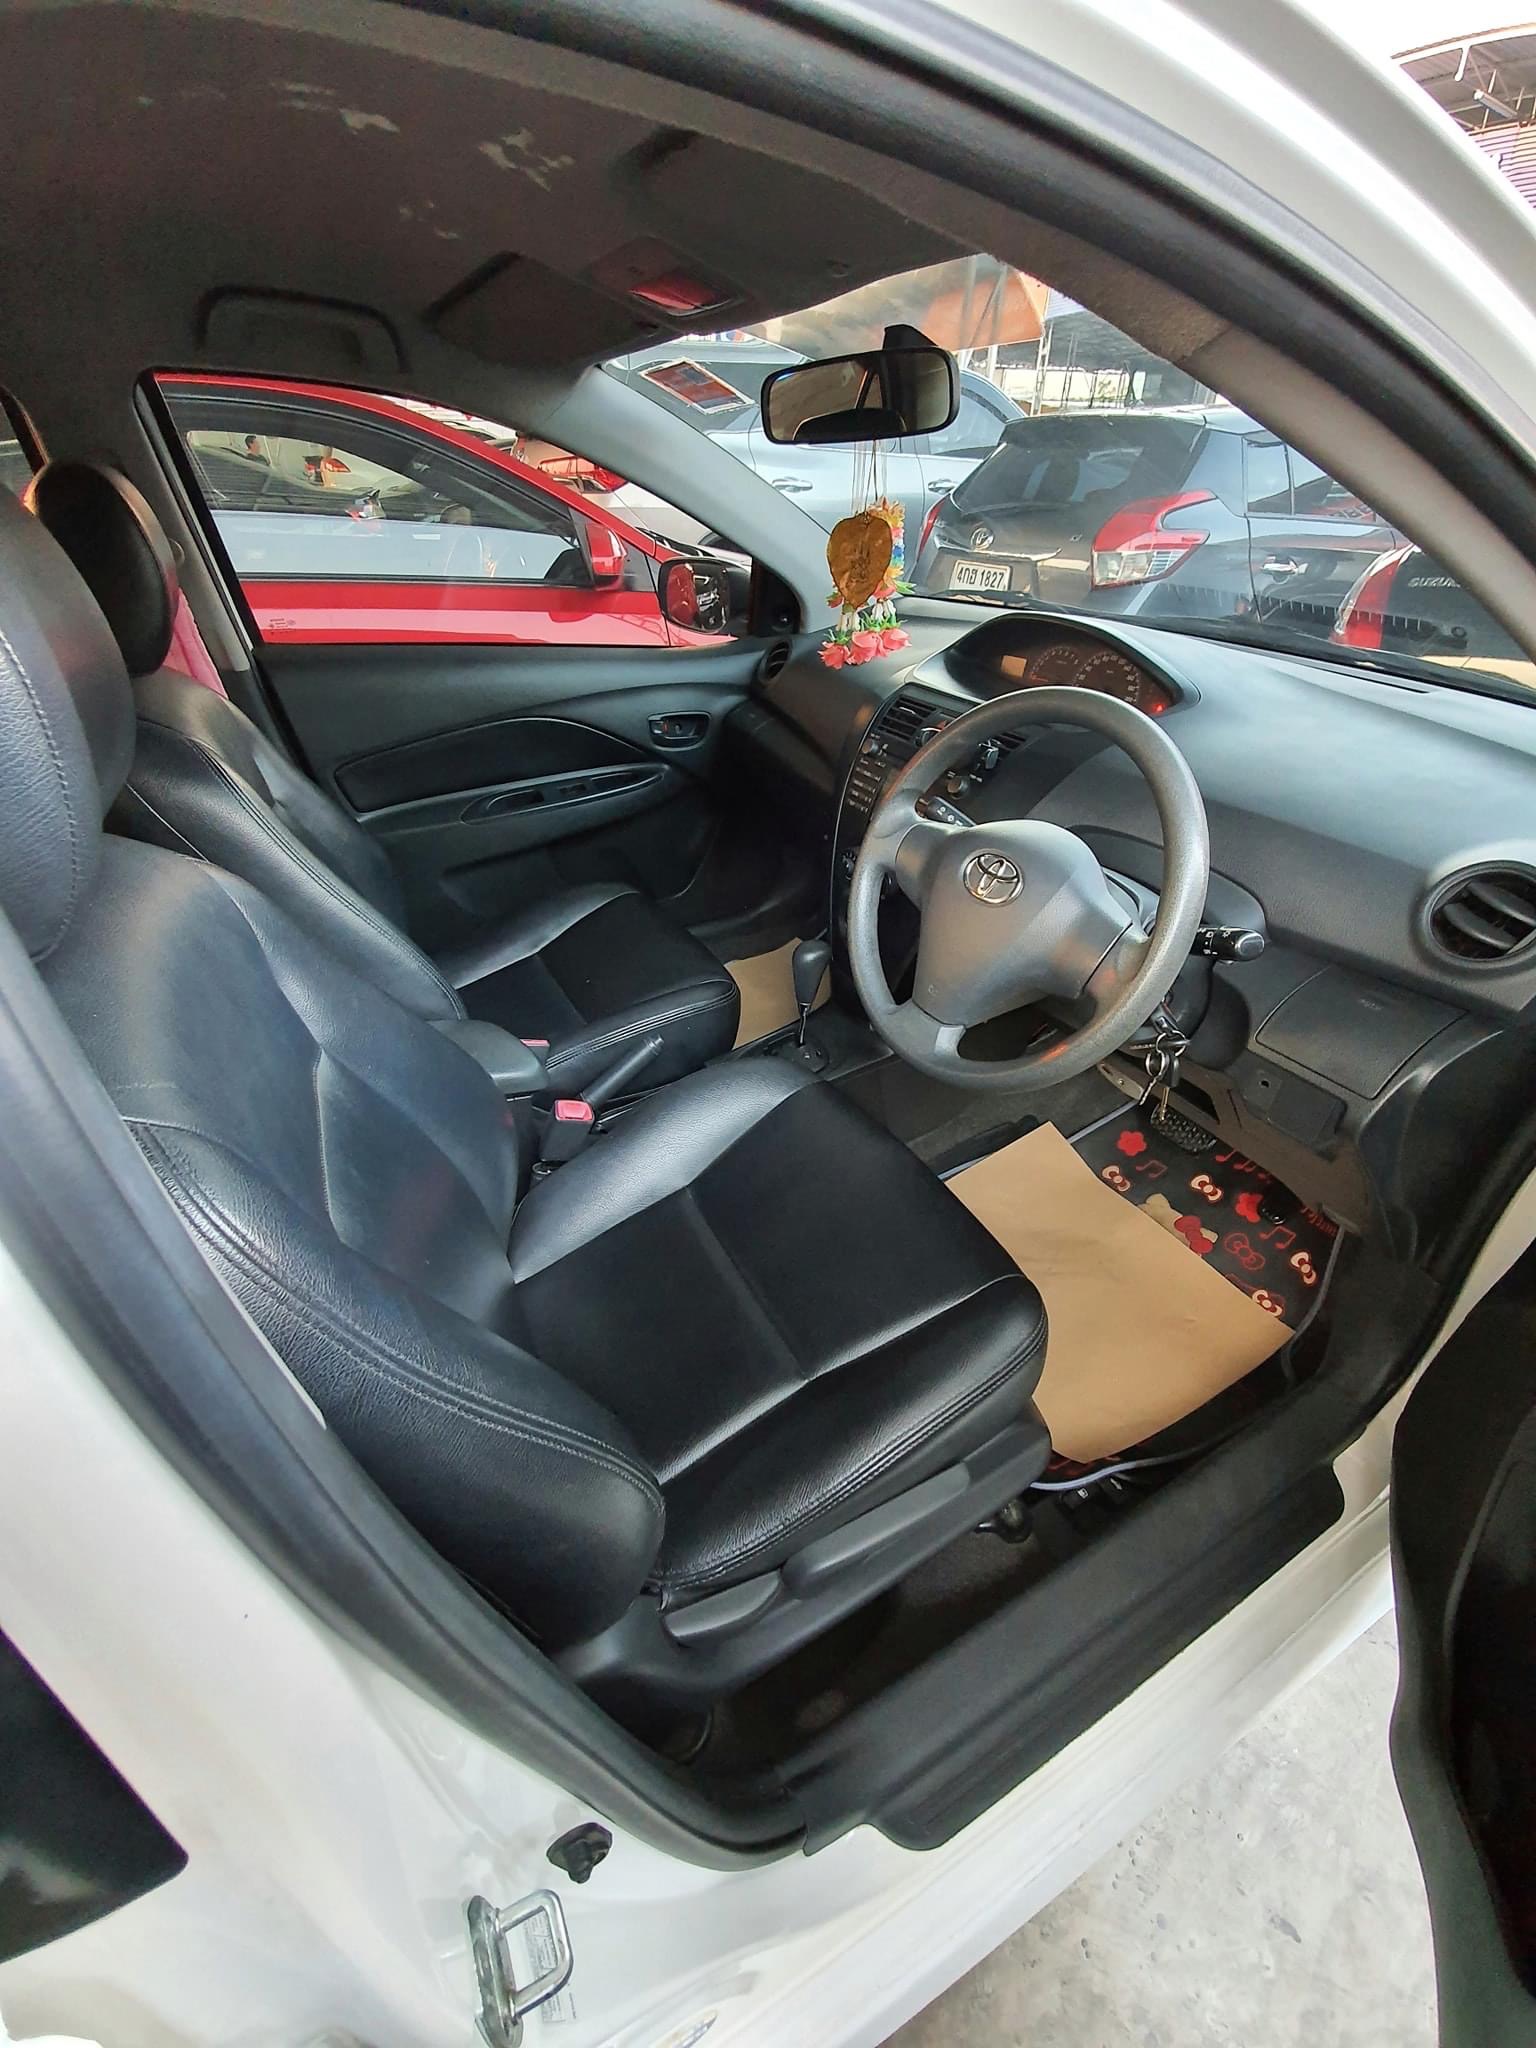 Toyota Vios ปี 2012 สีขาว